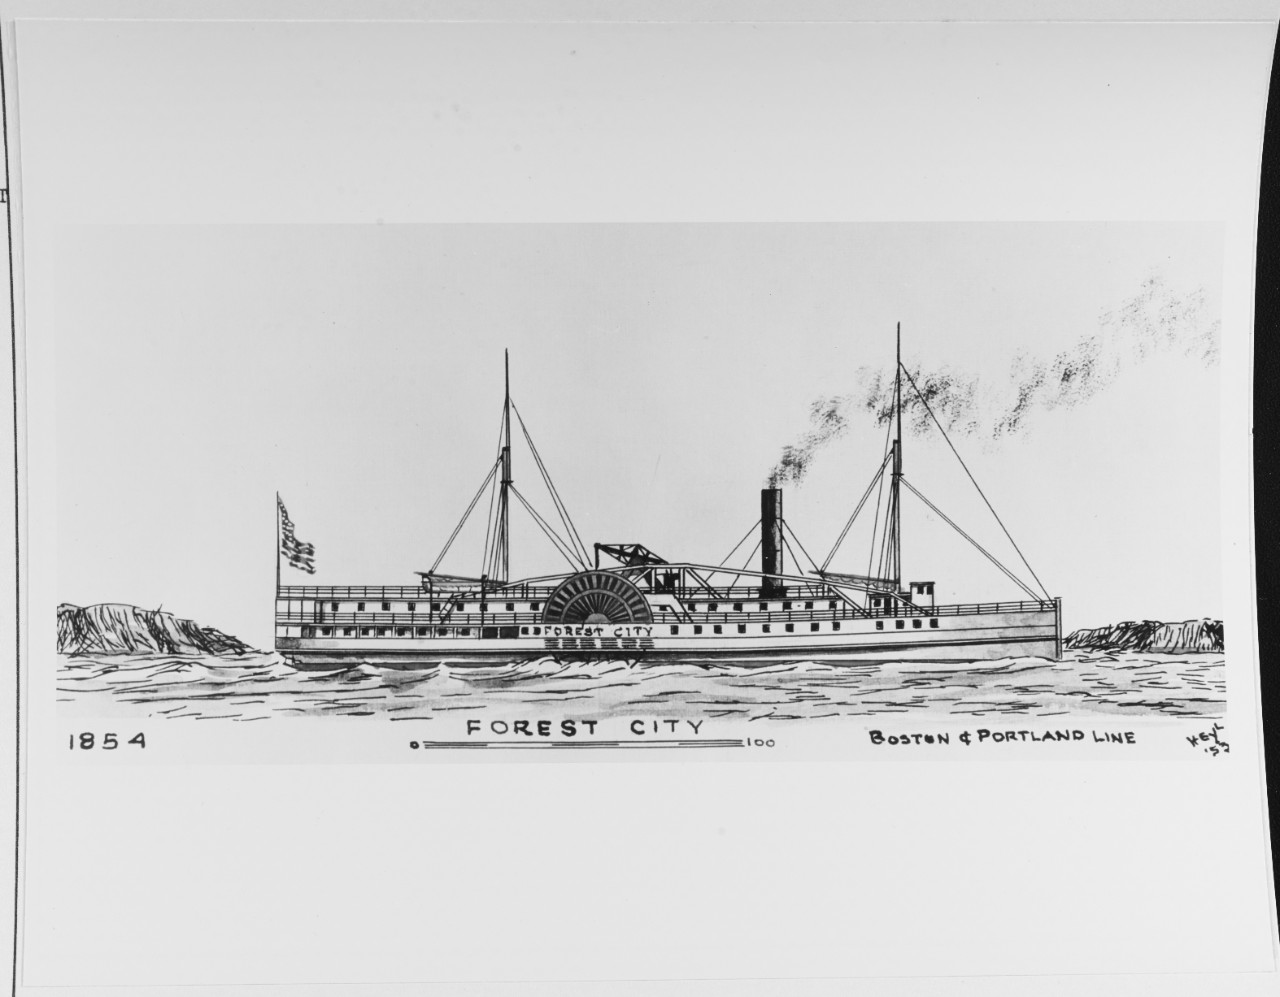 FOREST CITY (American merchant steamer, 1854-1896)